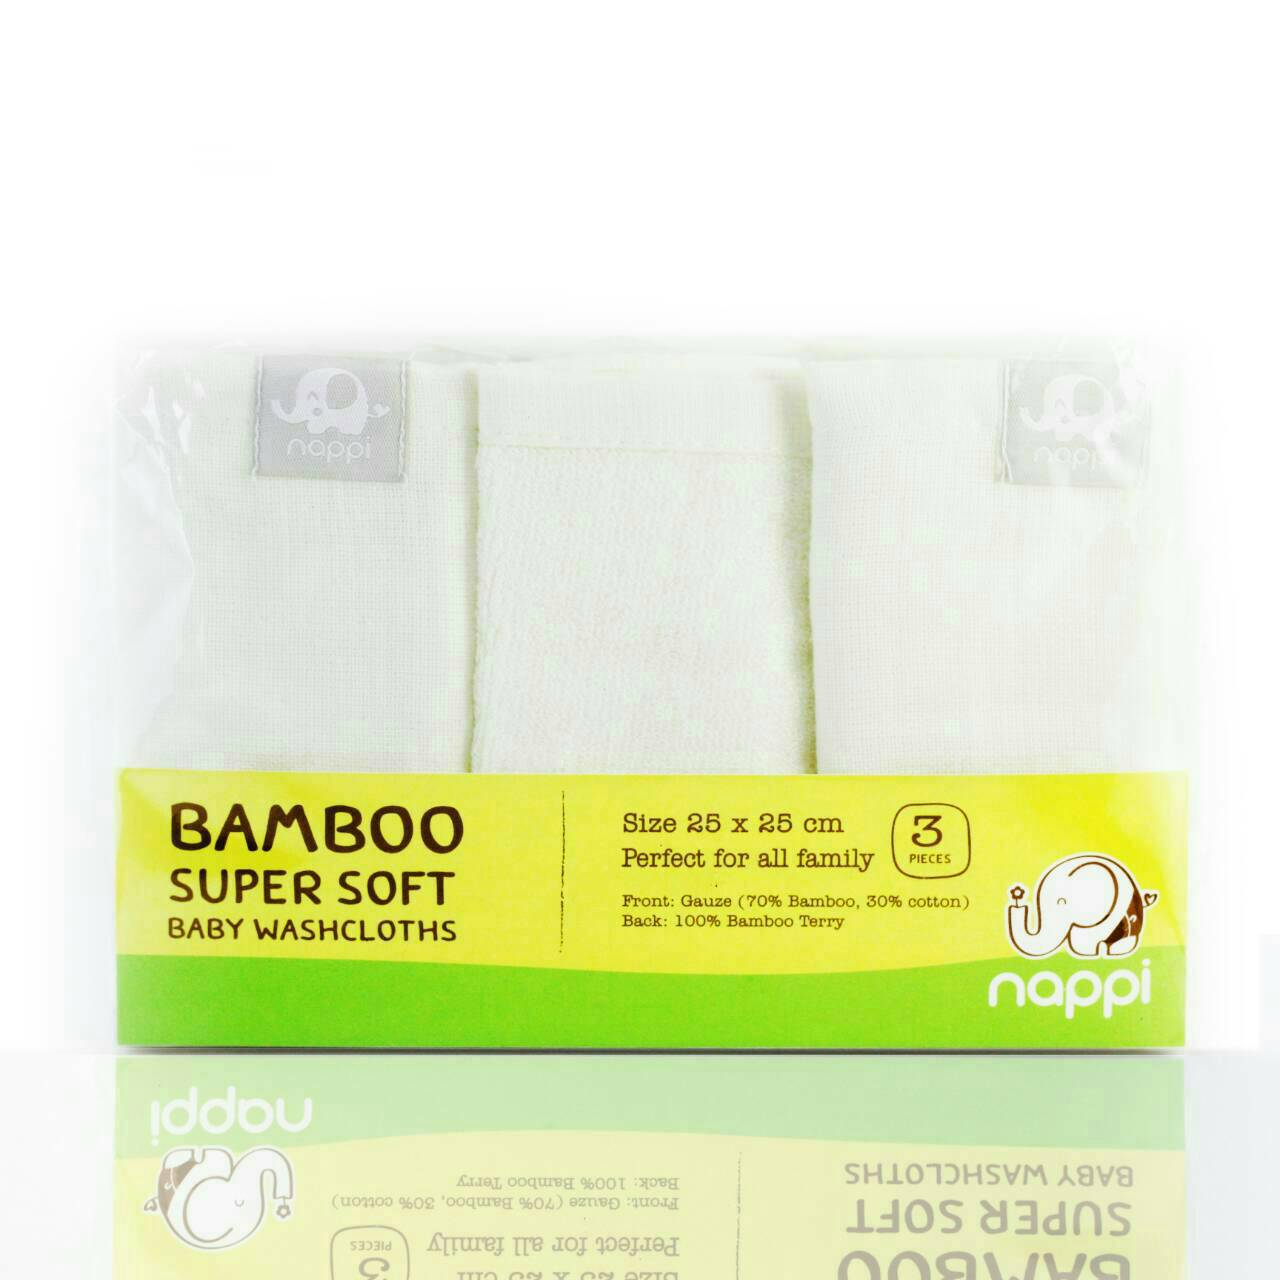 Nappi - Bamboo Super Soft Baby Washcloths